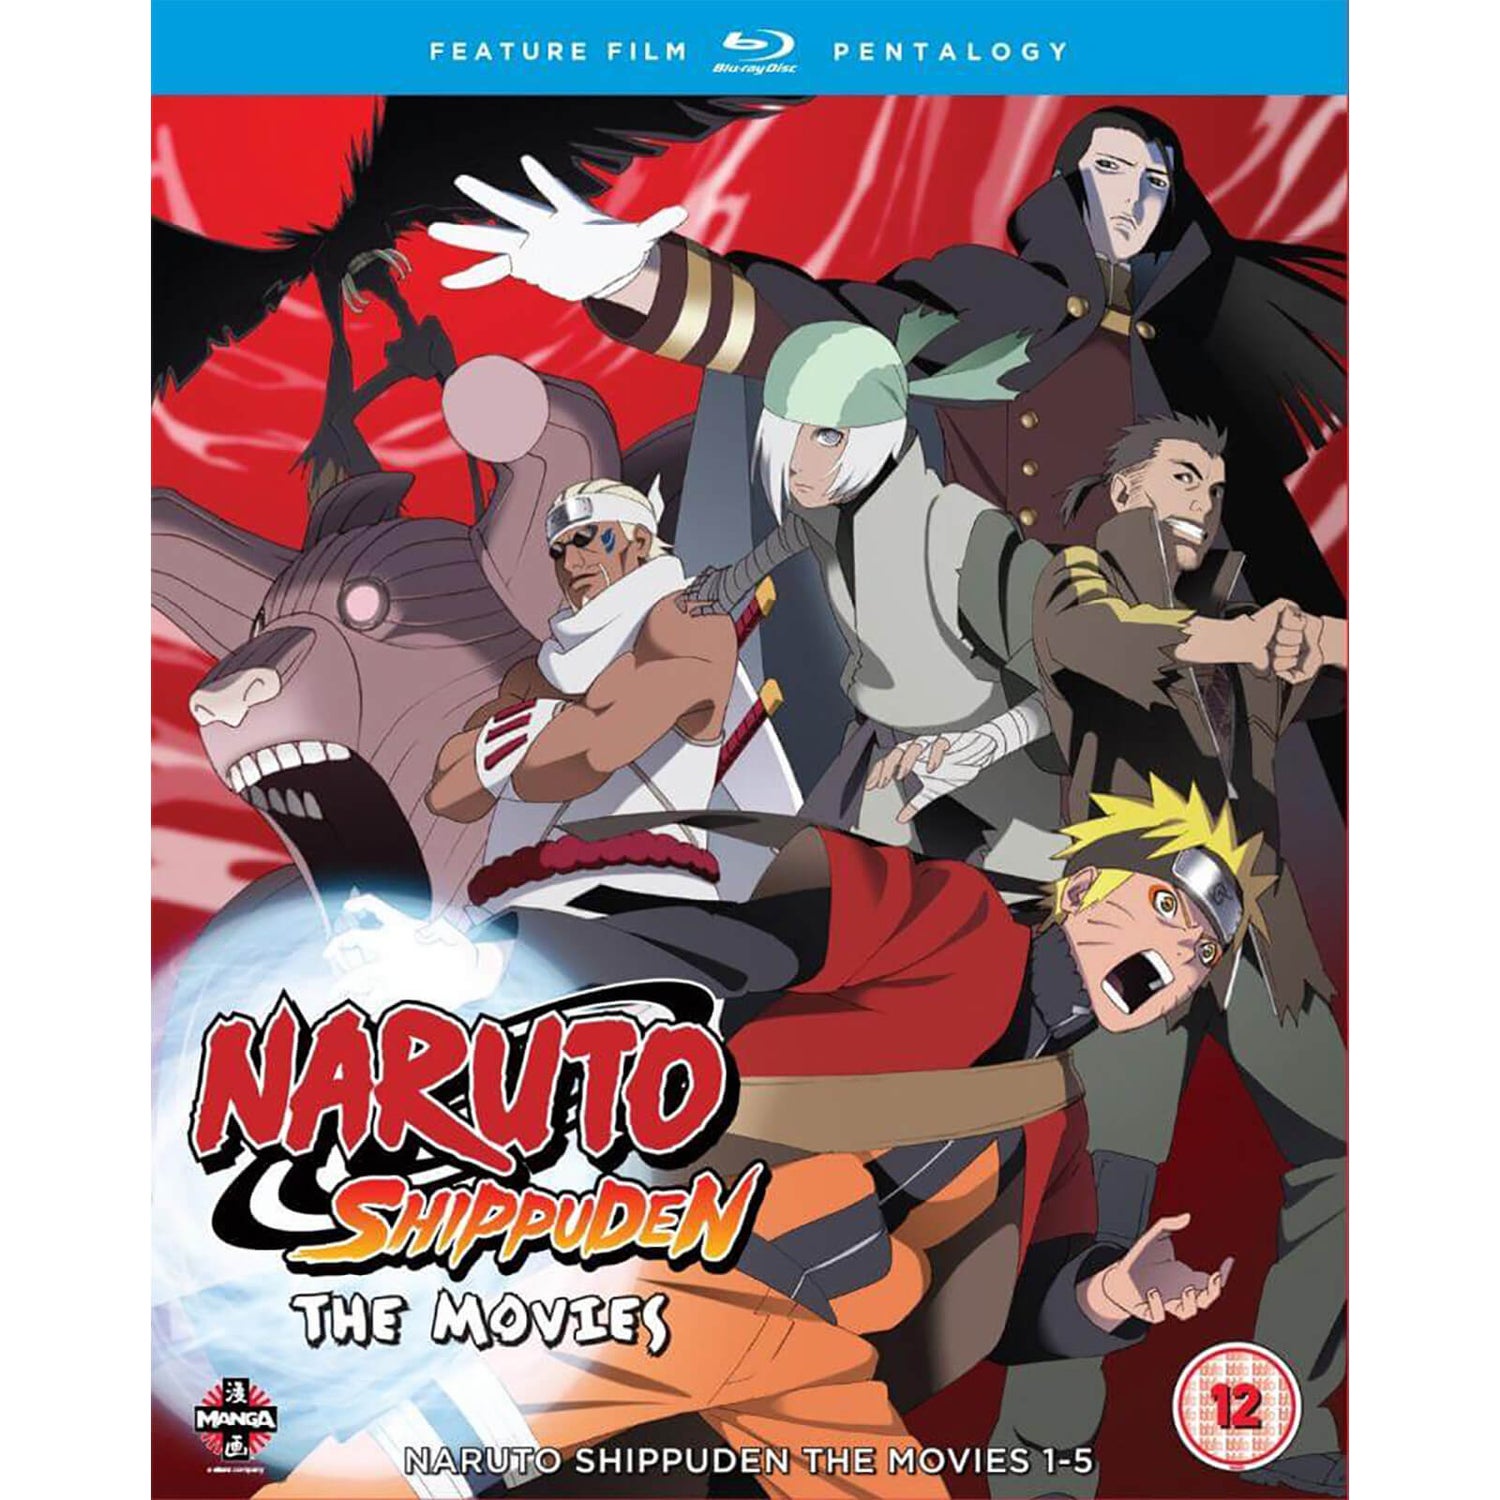 Naruto Shippuden Ultimate Ninja 5 Walkthrough Part 88 Guy's